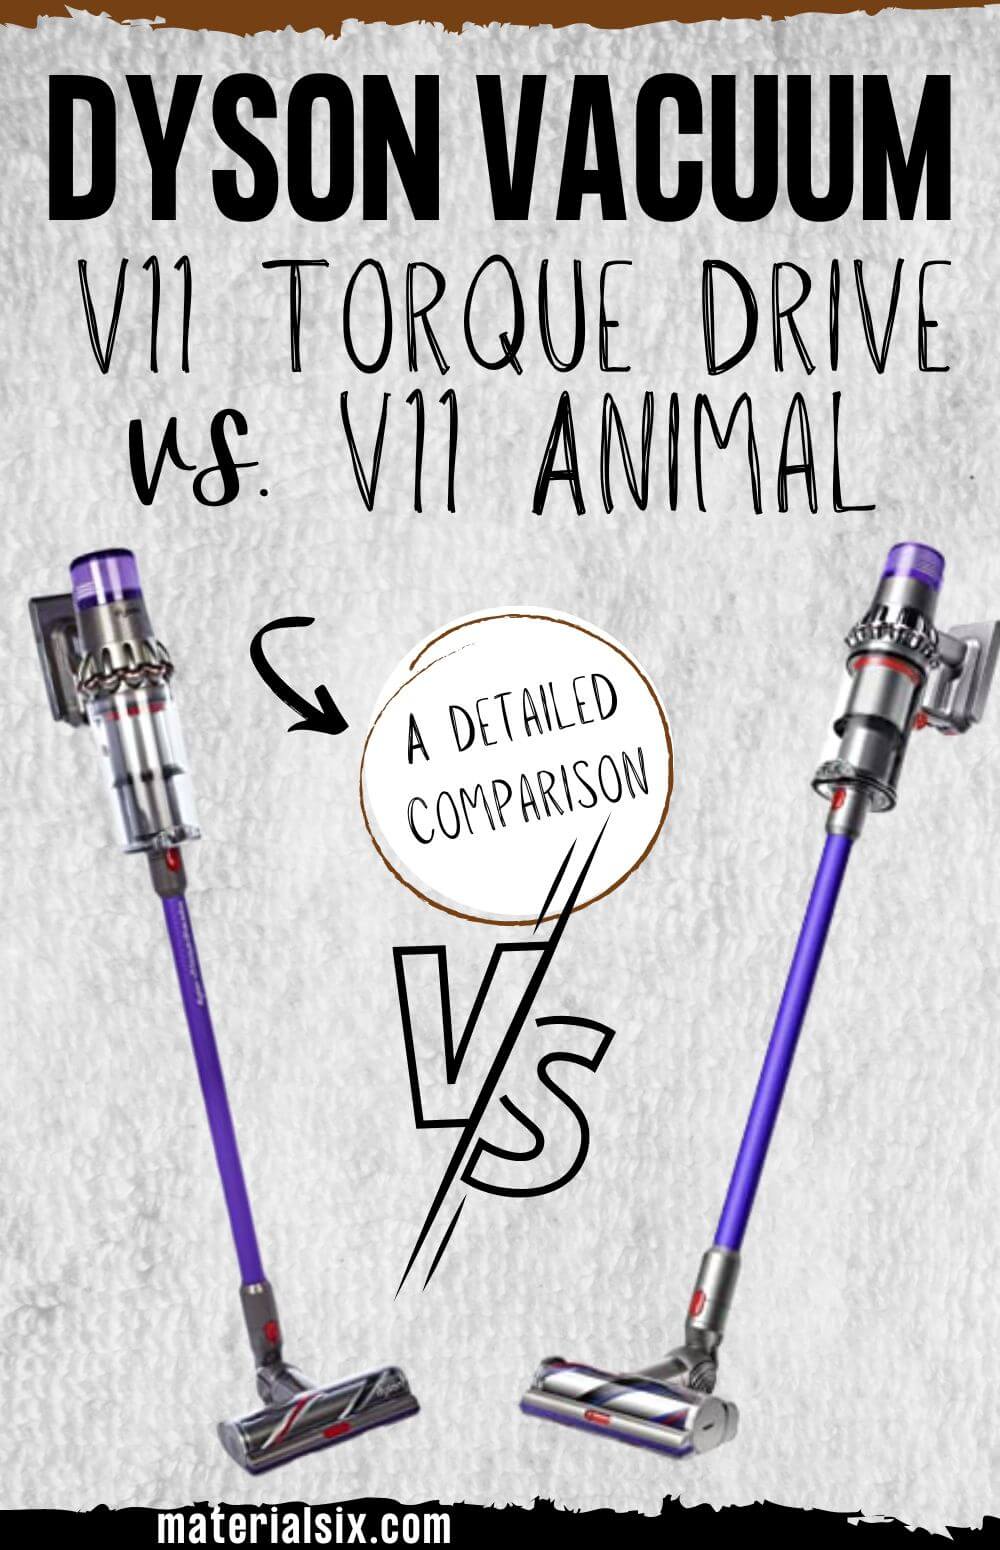 Dyson V11 Torque Drive VS Animal